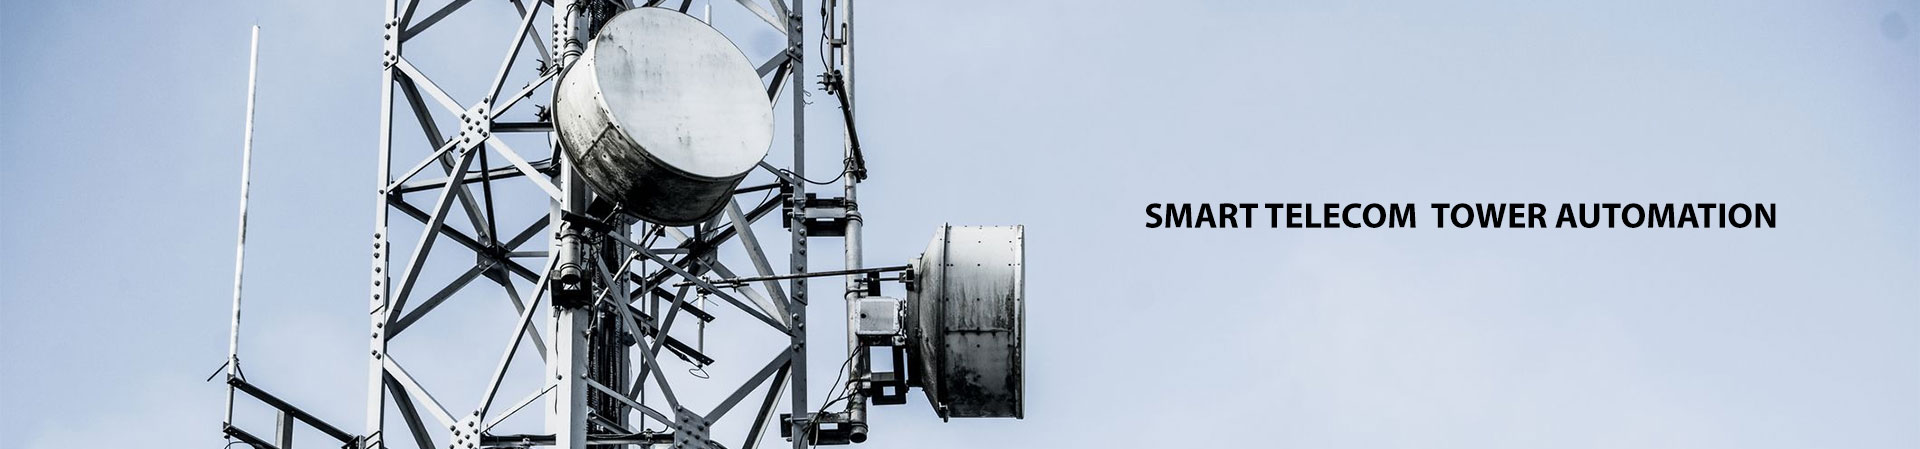 smart telecom tower monitoring